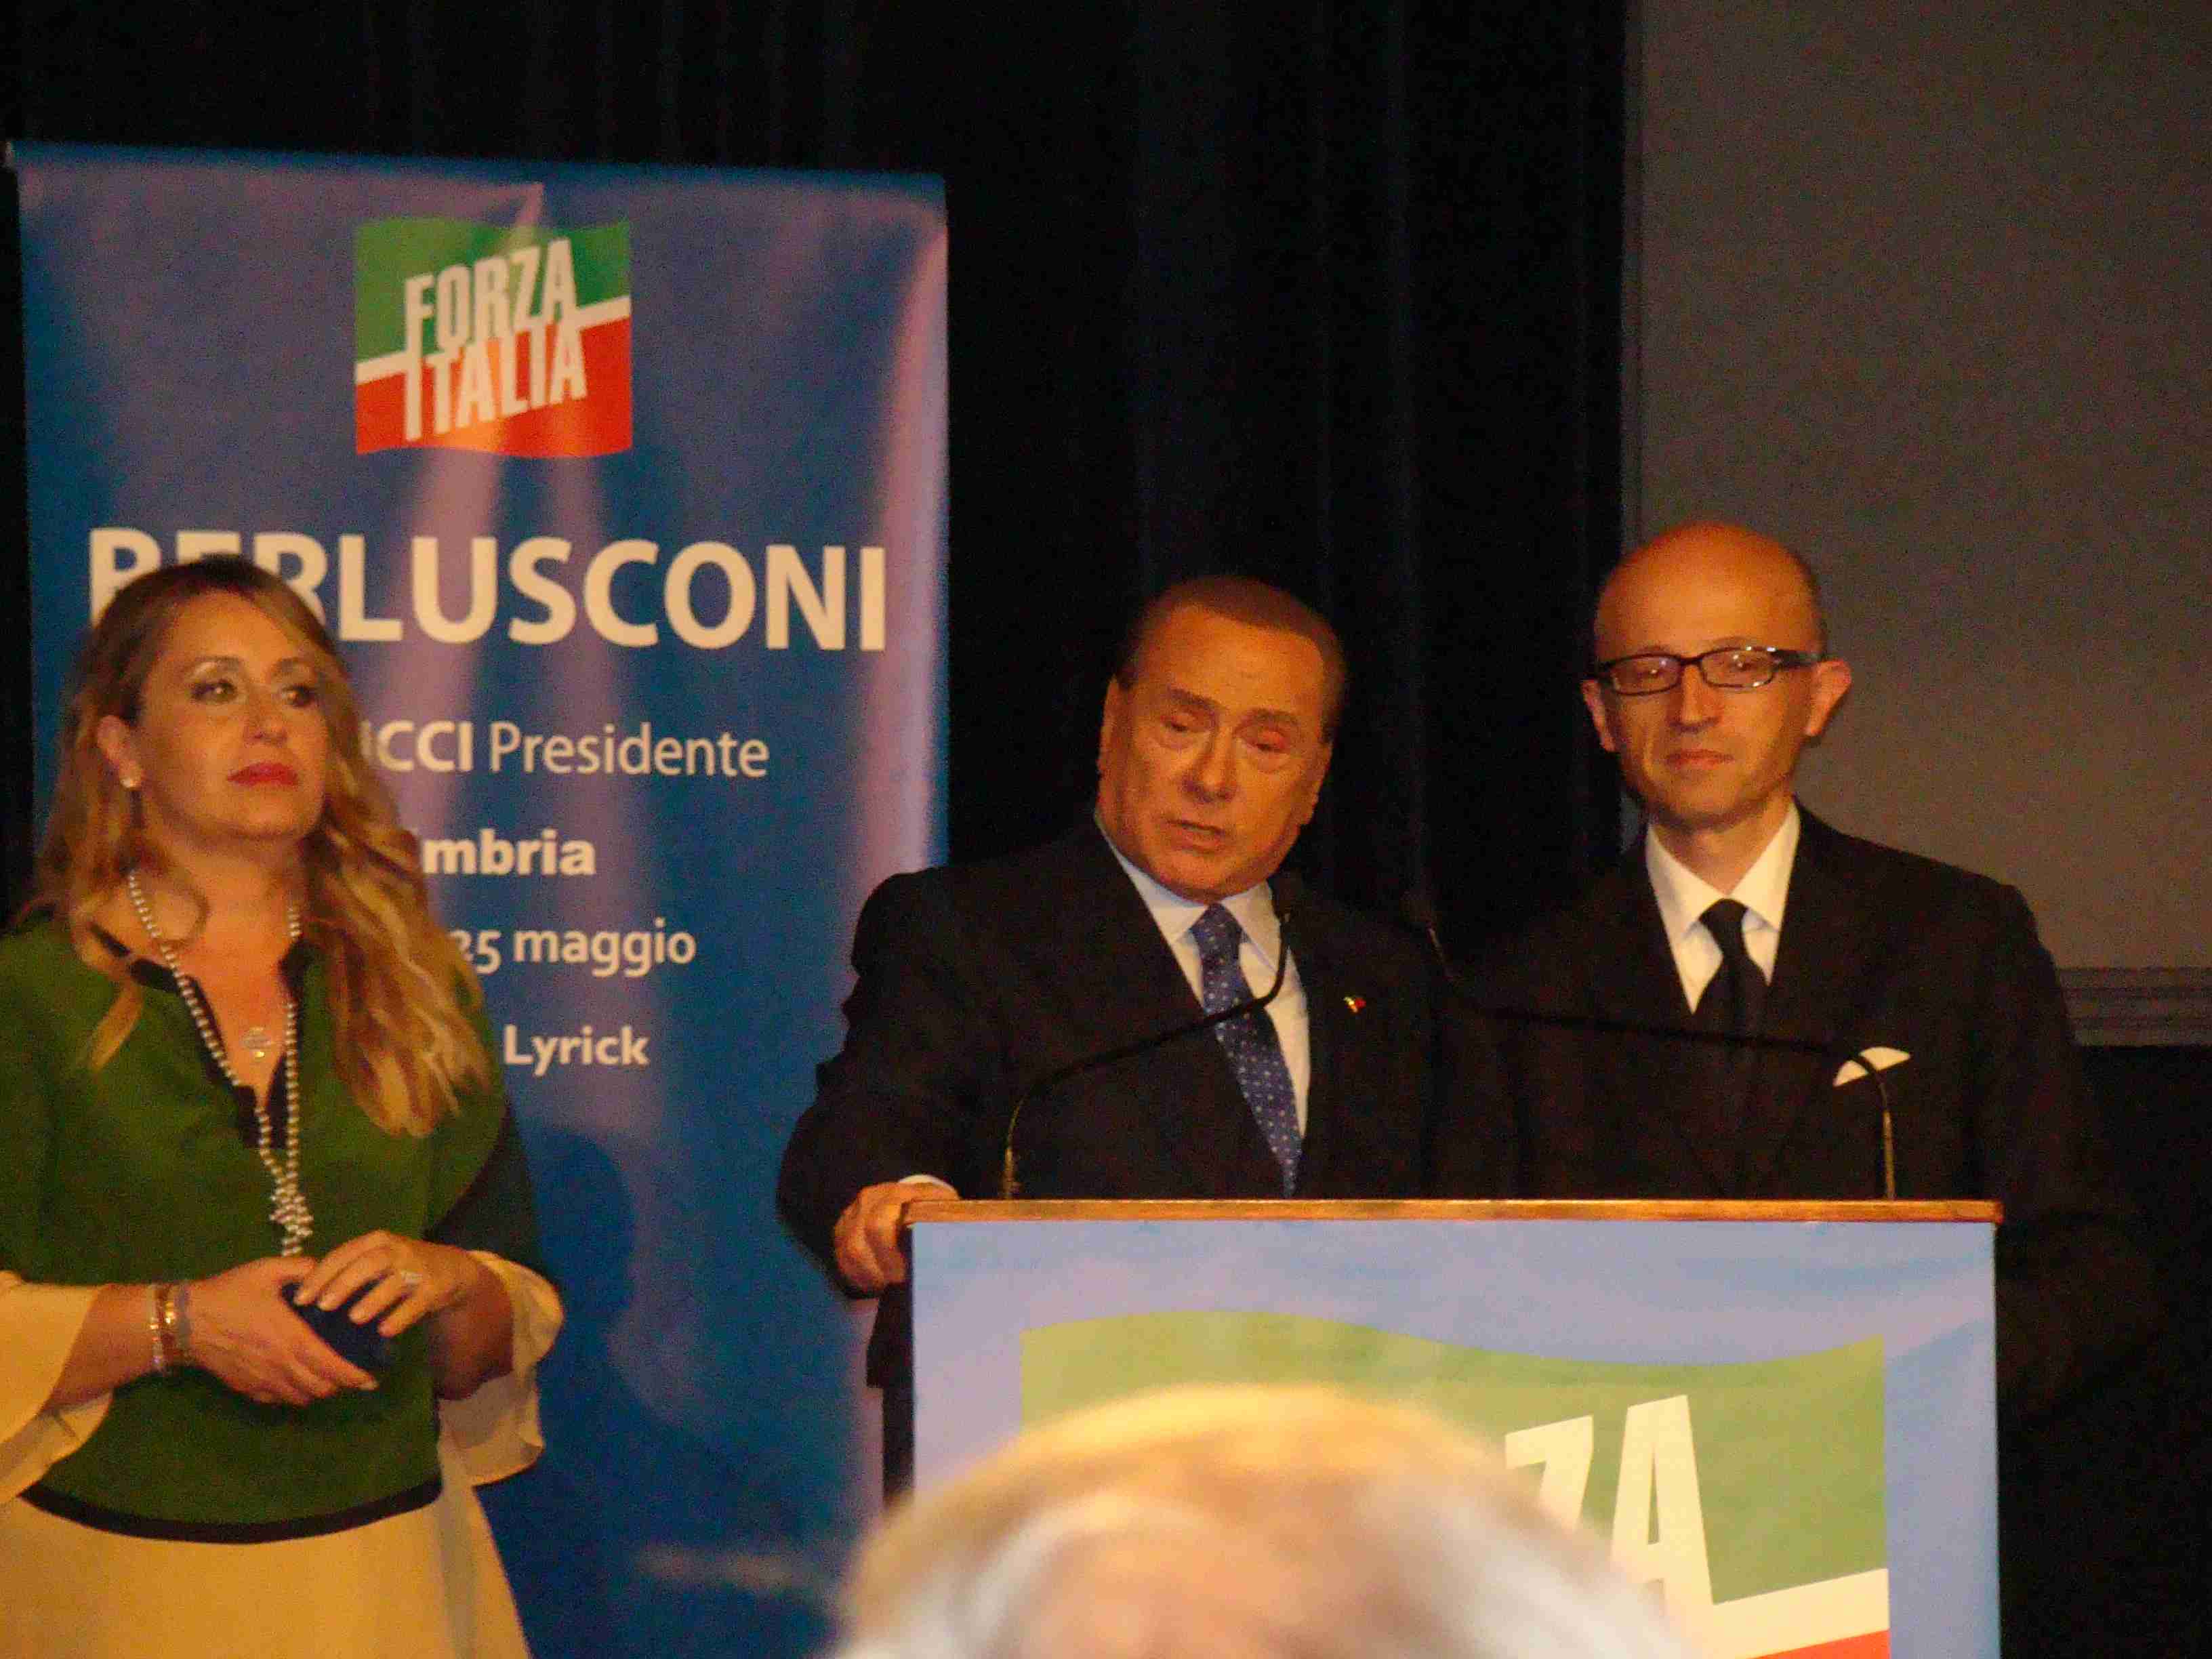 Umbria: Berlusconi torna a infiammare la platea.